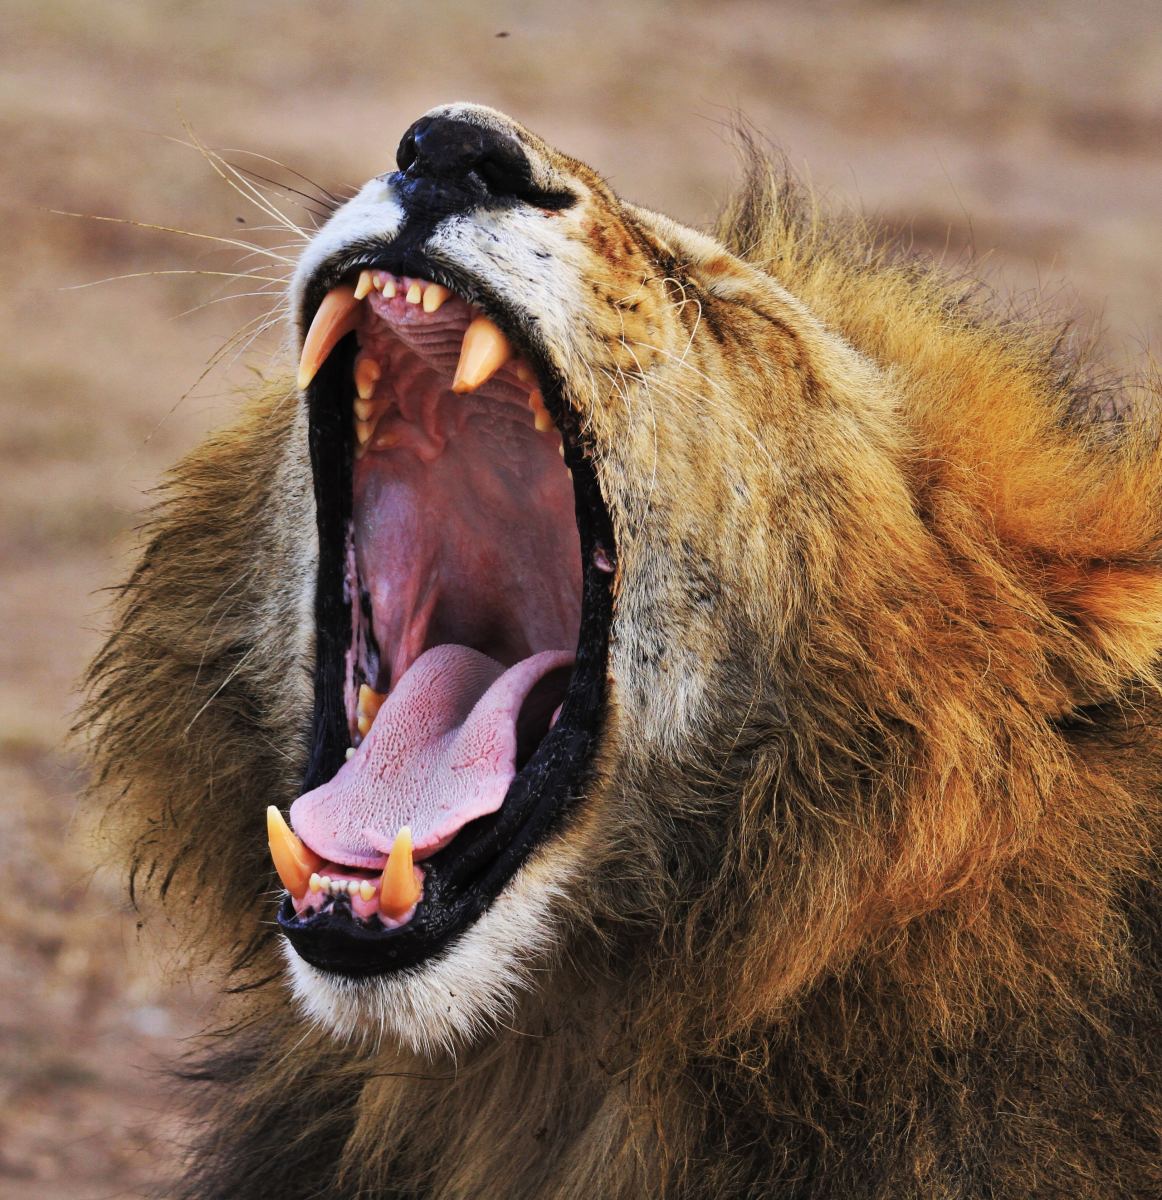 Roaring or yawning?